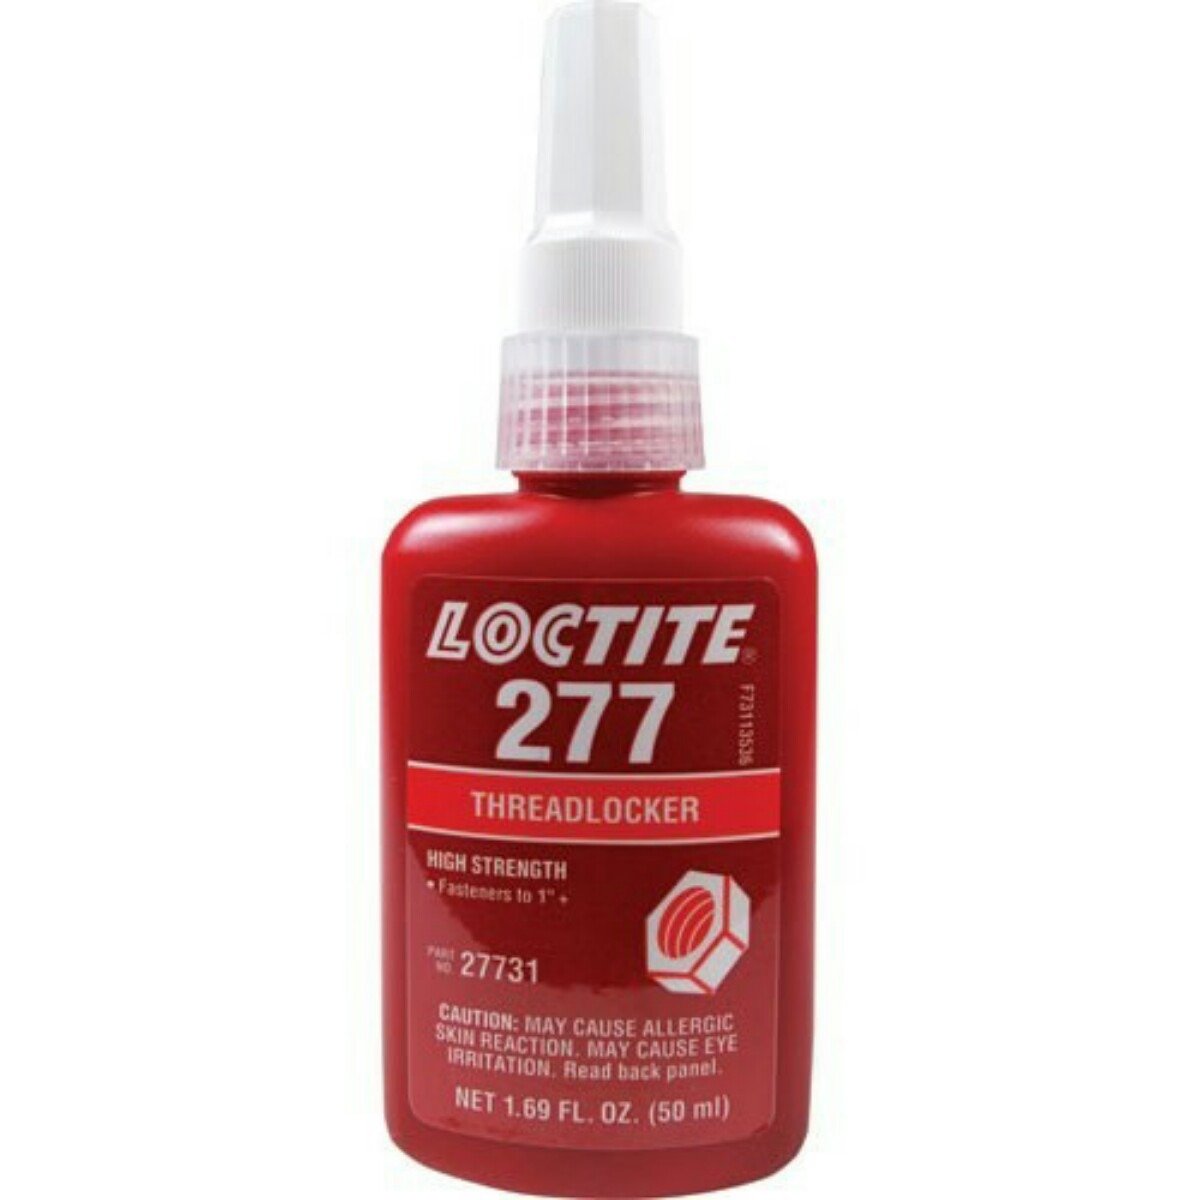 Loctite 277 Threadlocking Adhesive 50 ml